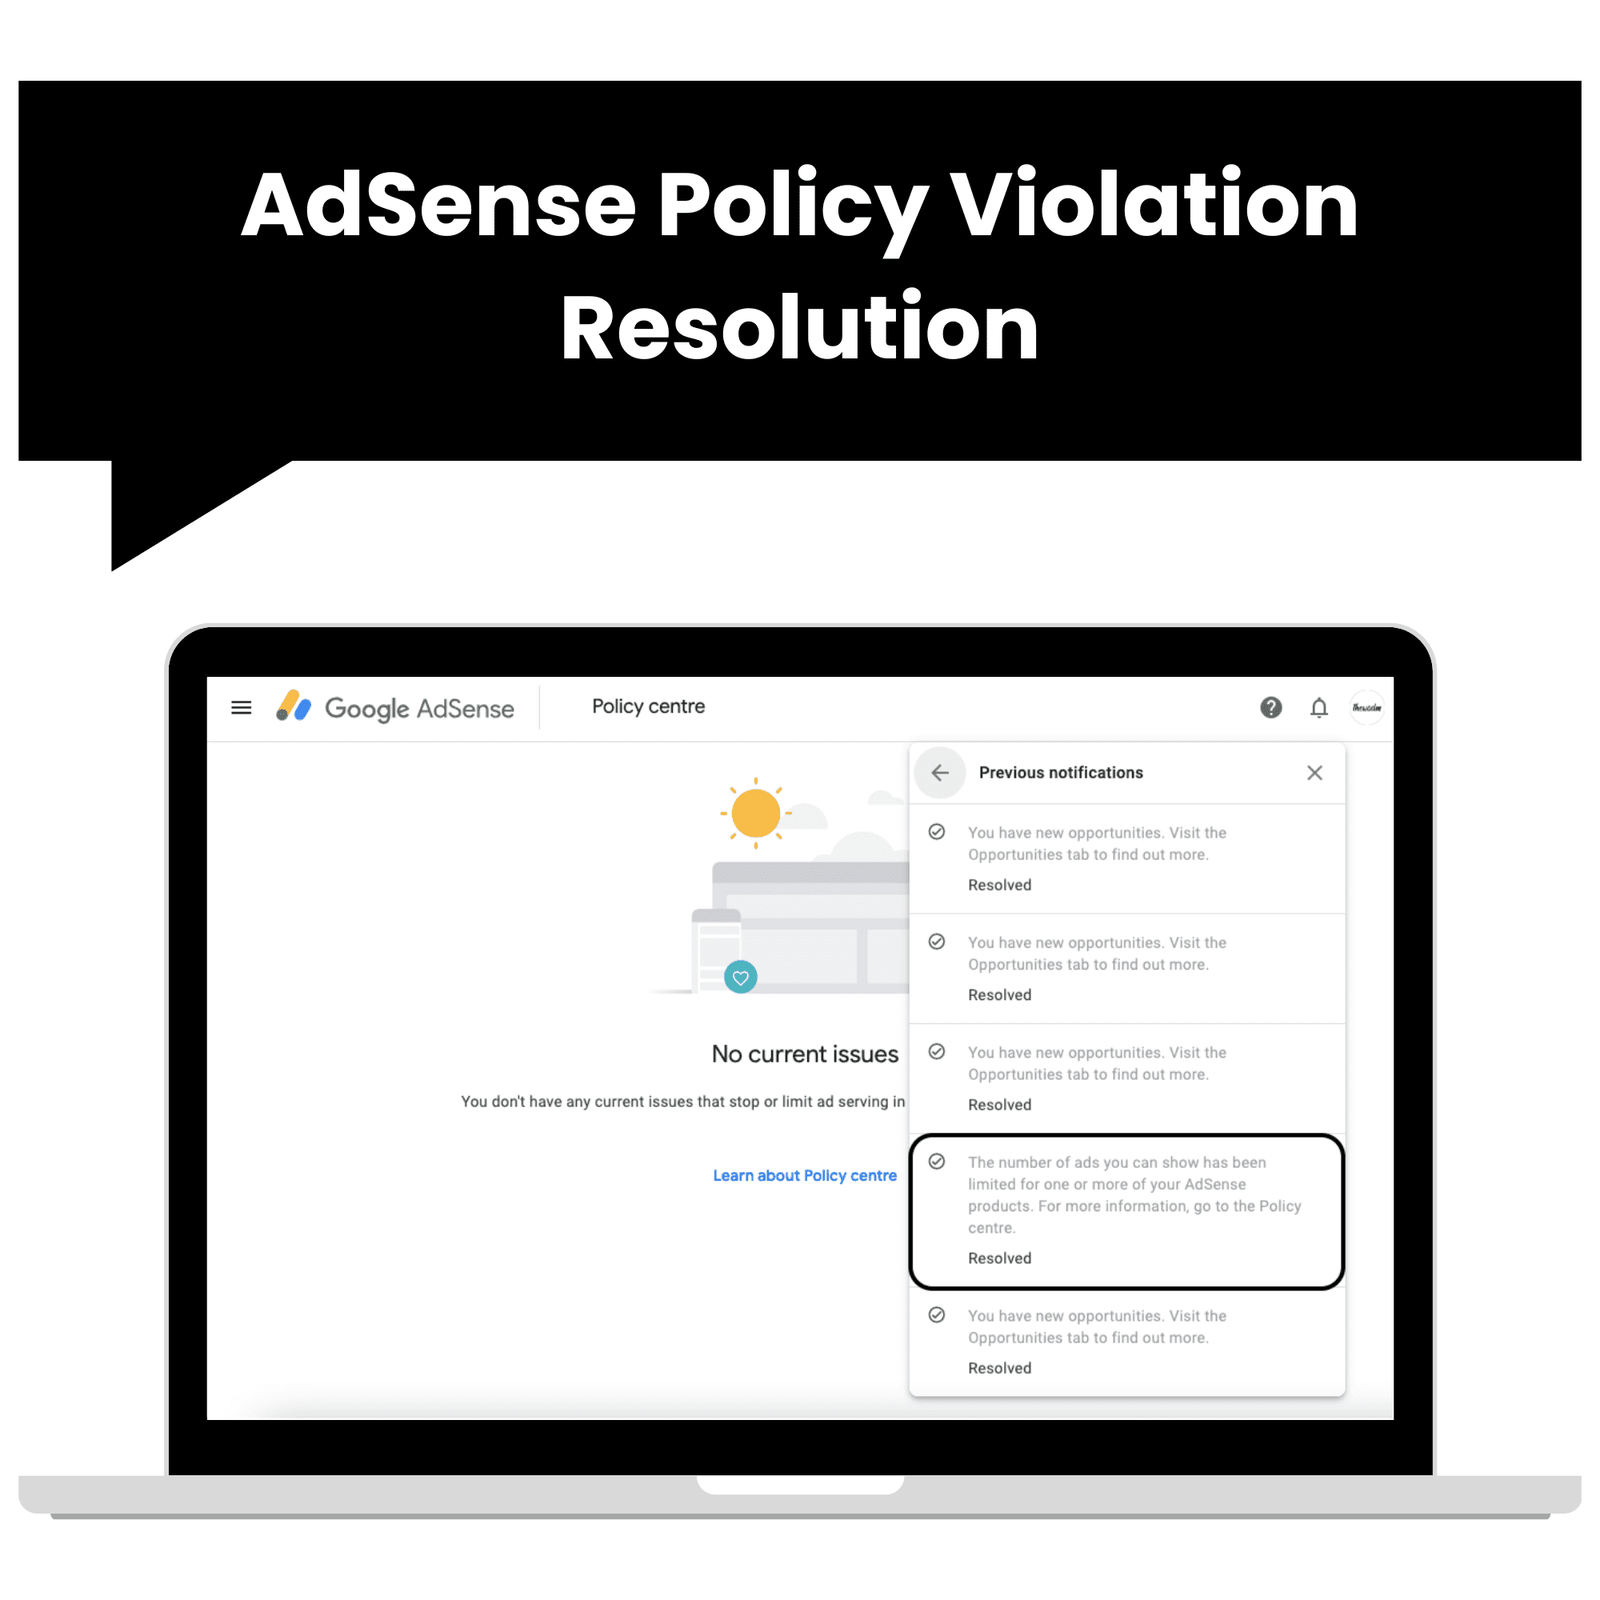 AdSense Policy Violation Resolution